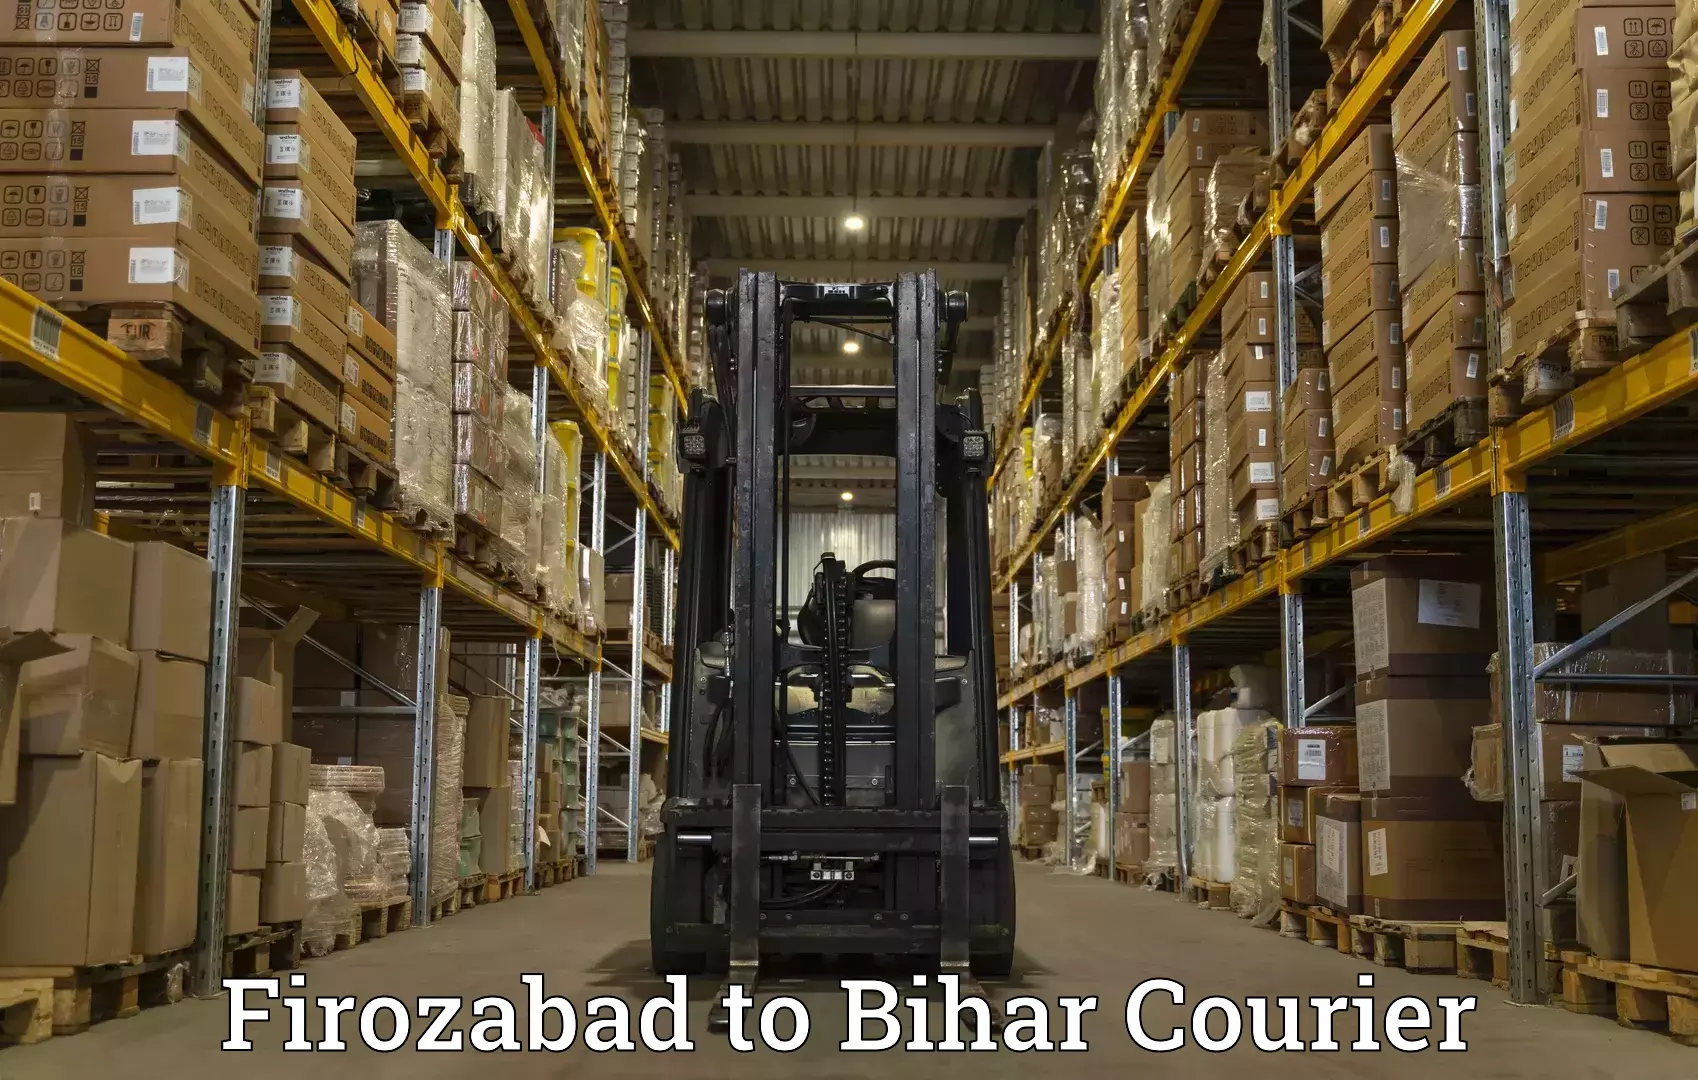 State-of-the-art courier technology Firozabad to Madhepura